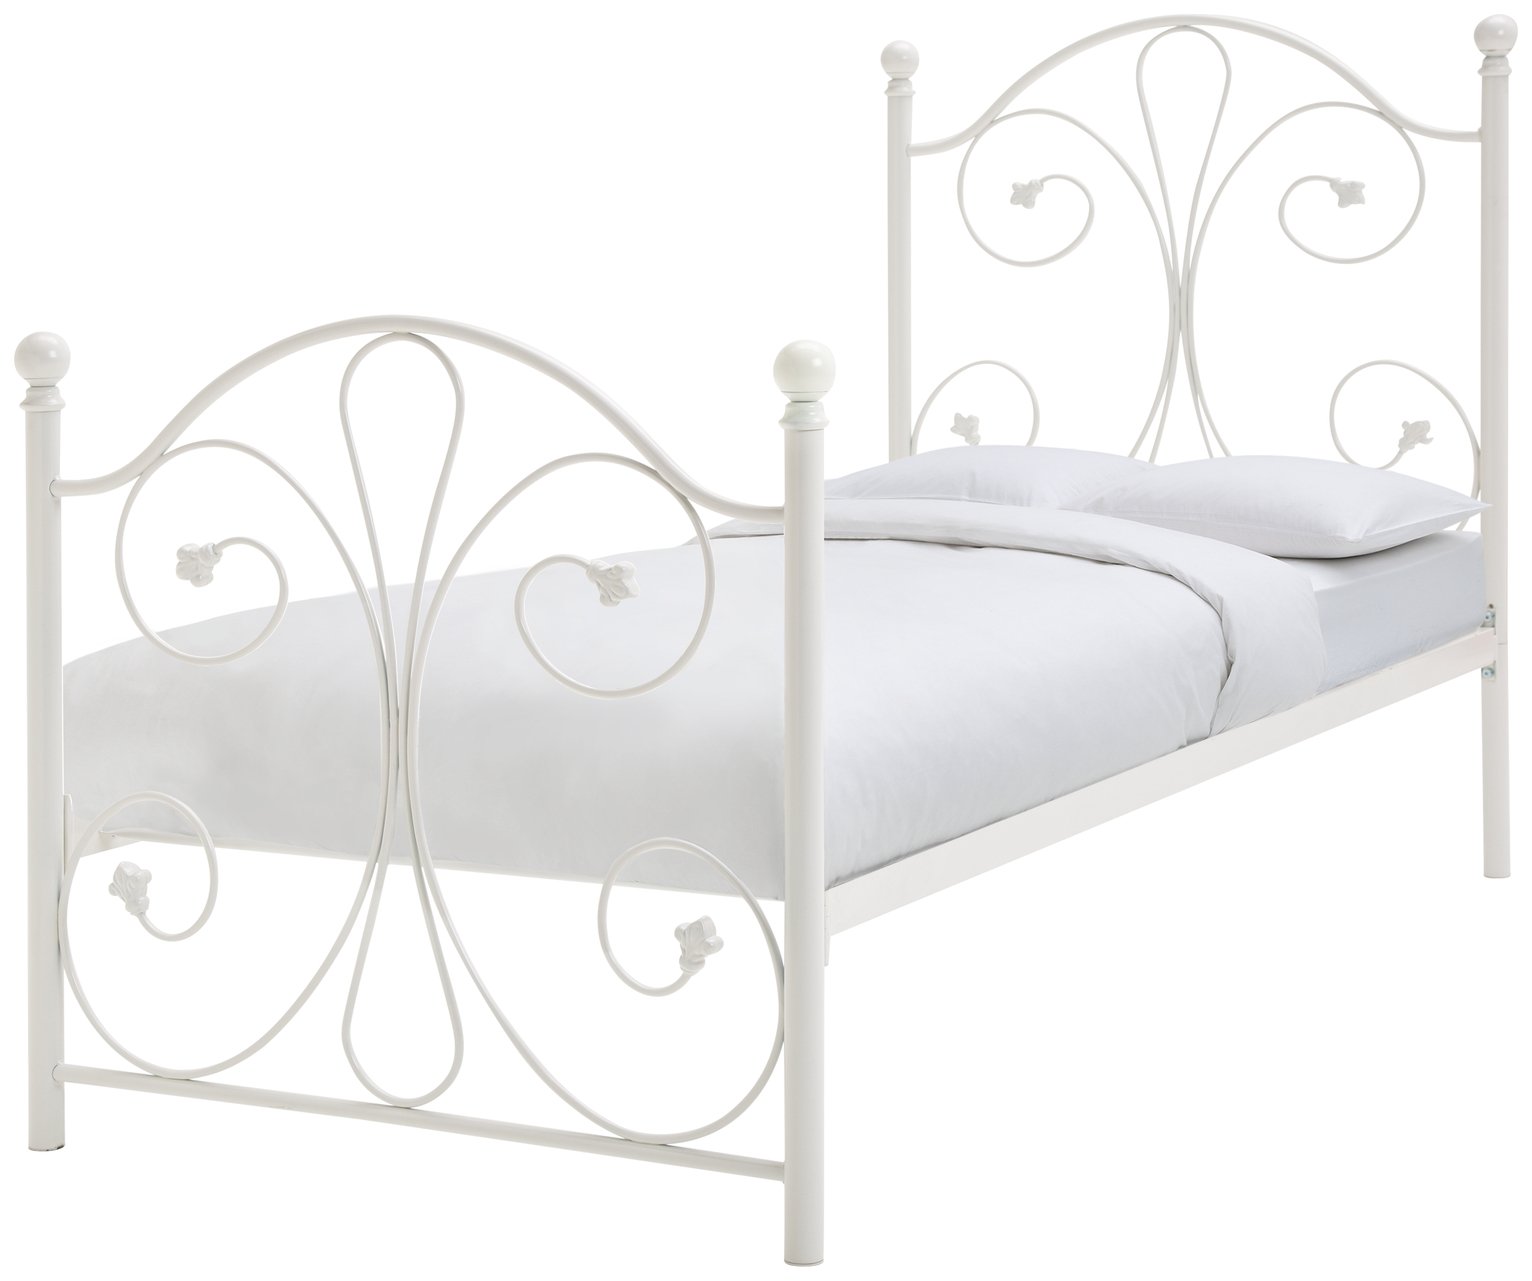 Argos Home Marietta Single Metal Bed Frame - White